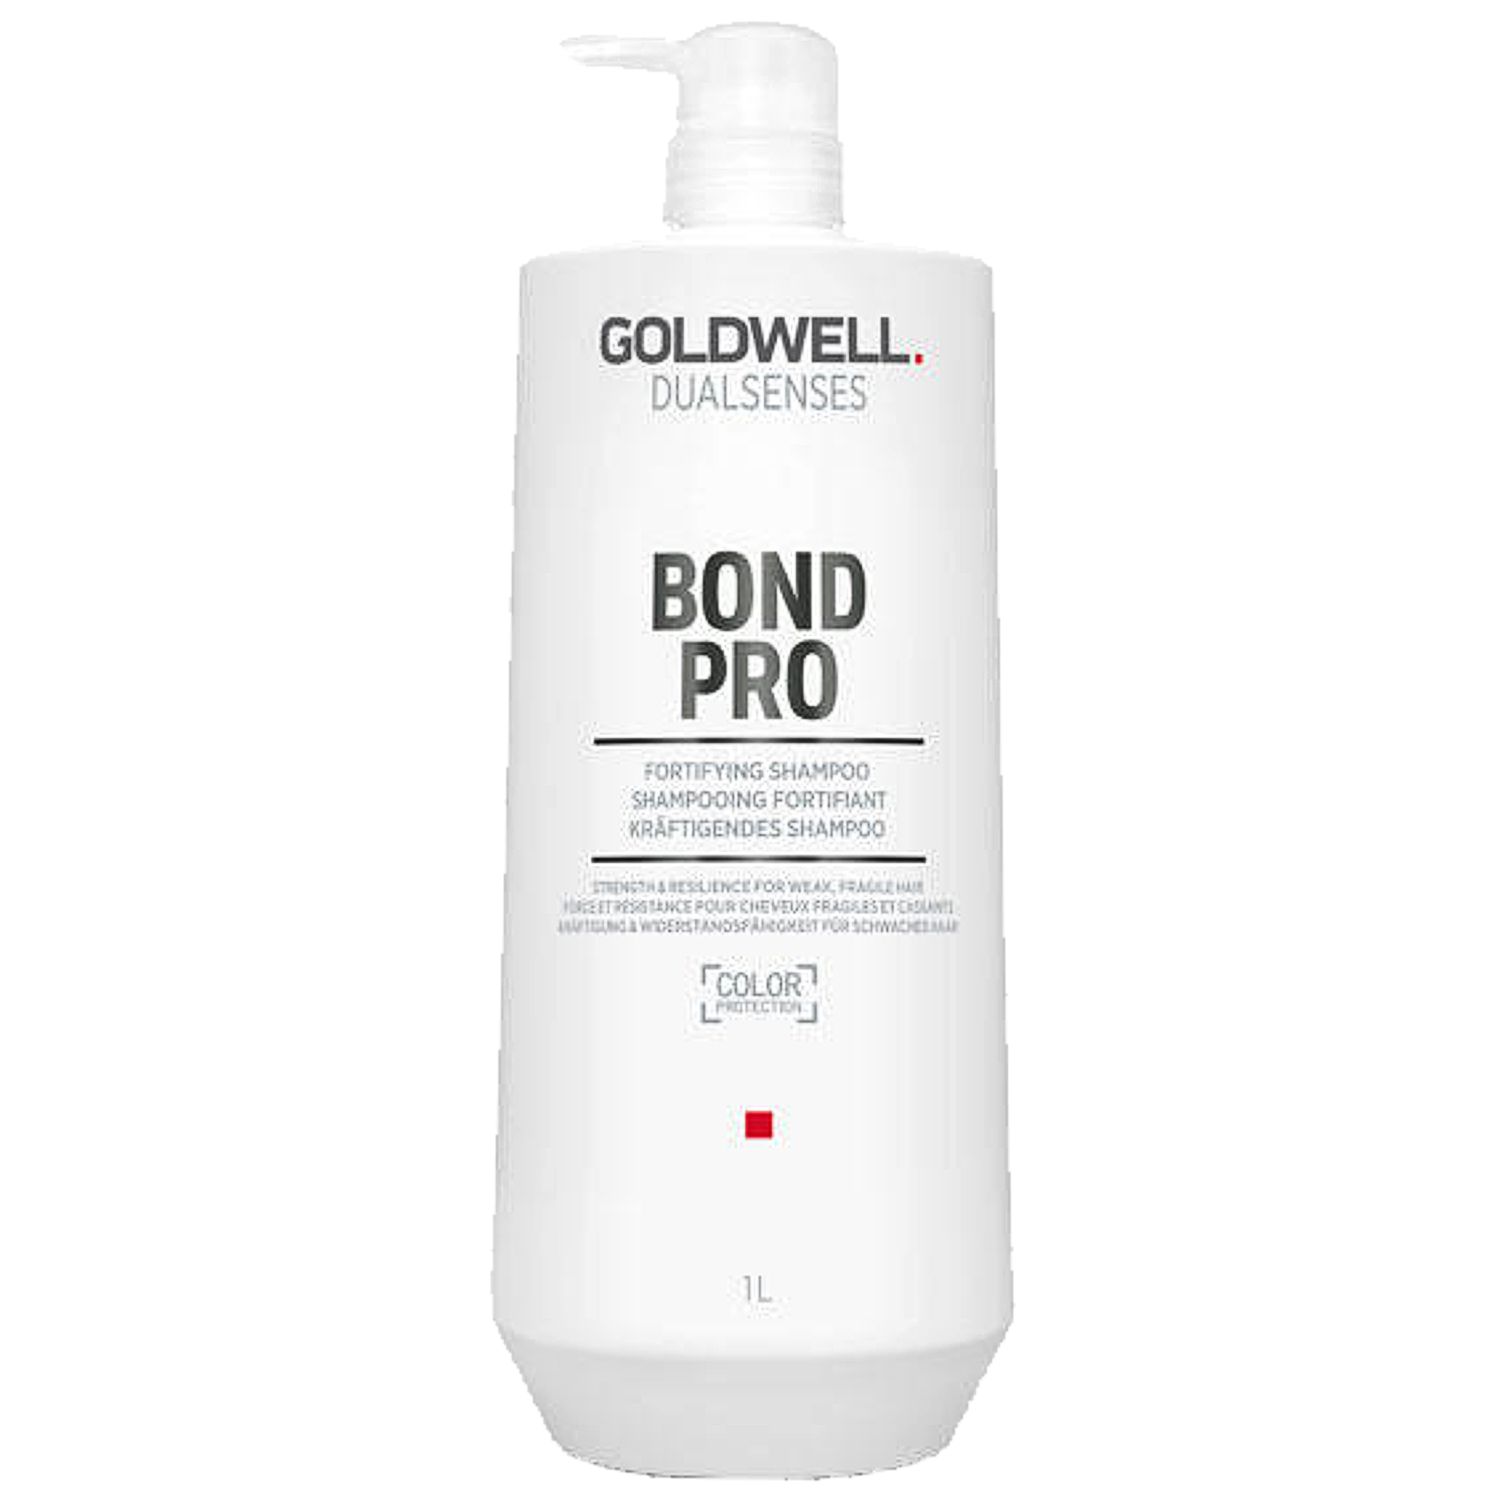 GOLDWELL Dualsenses BOND PRO Fortifying Shampoo 1L